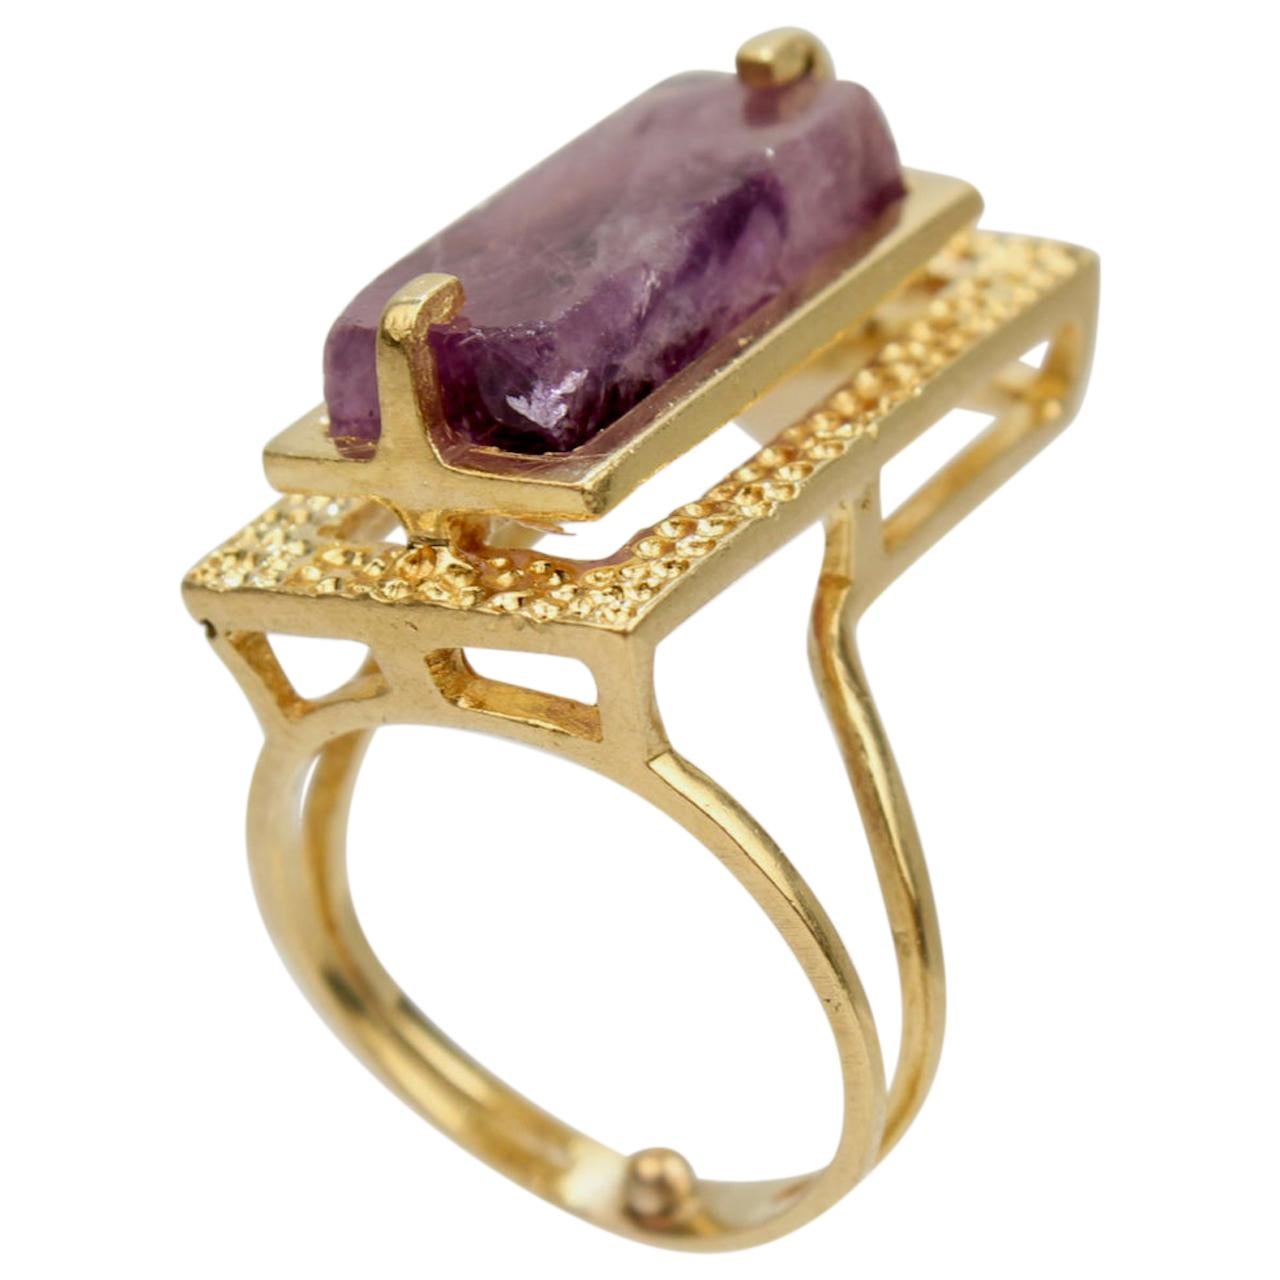 Modernist Asymmetrical 18k Gold and Rough Cut Amethyst Gemstone Cocktail Ring